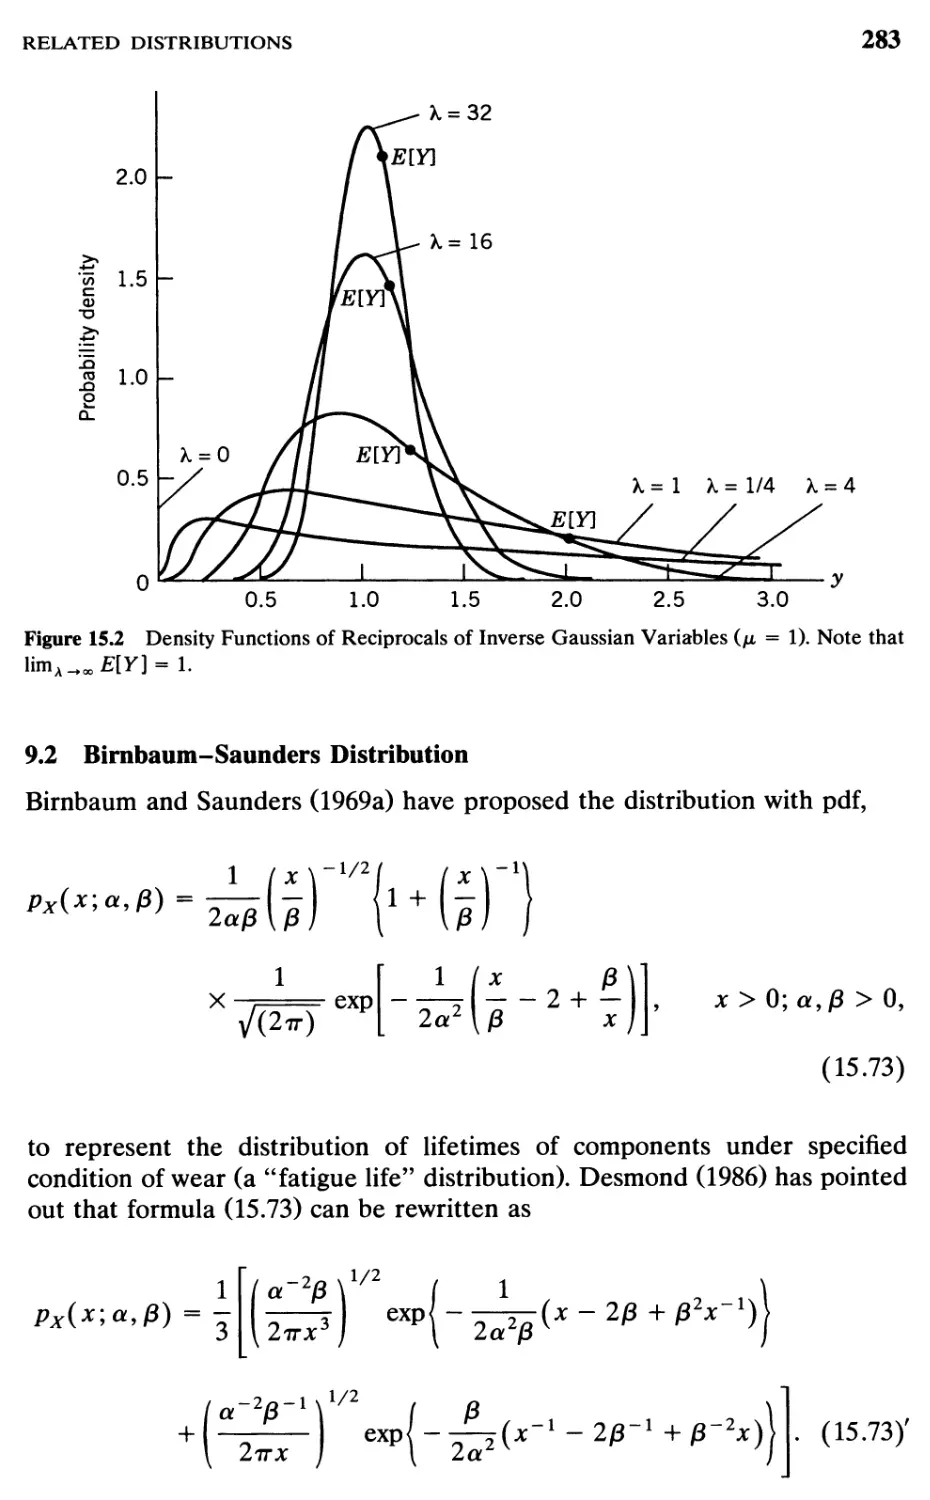 9.2 Birnbaum-Saunders Distribution, 283